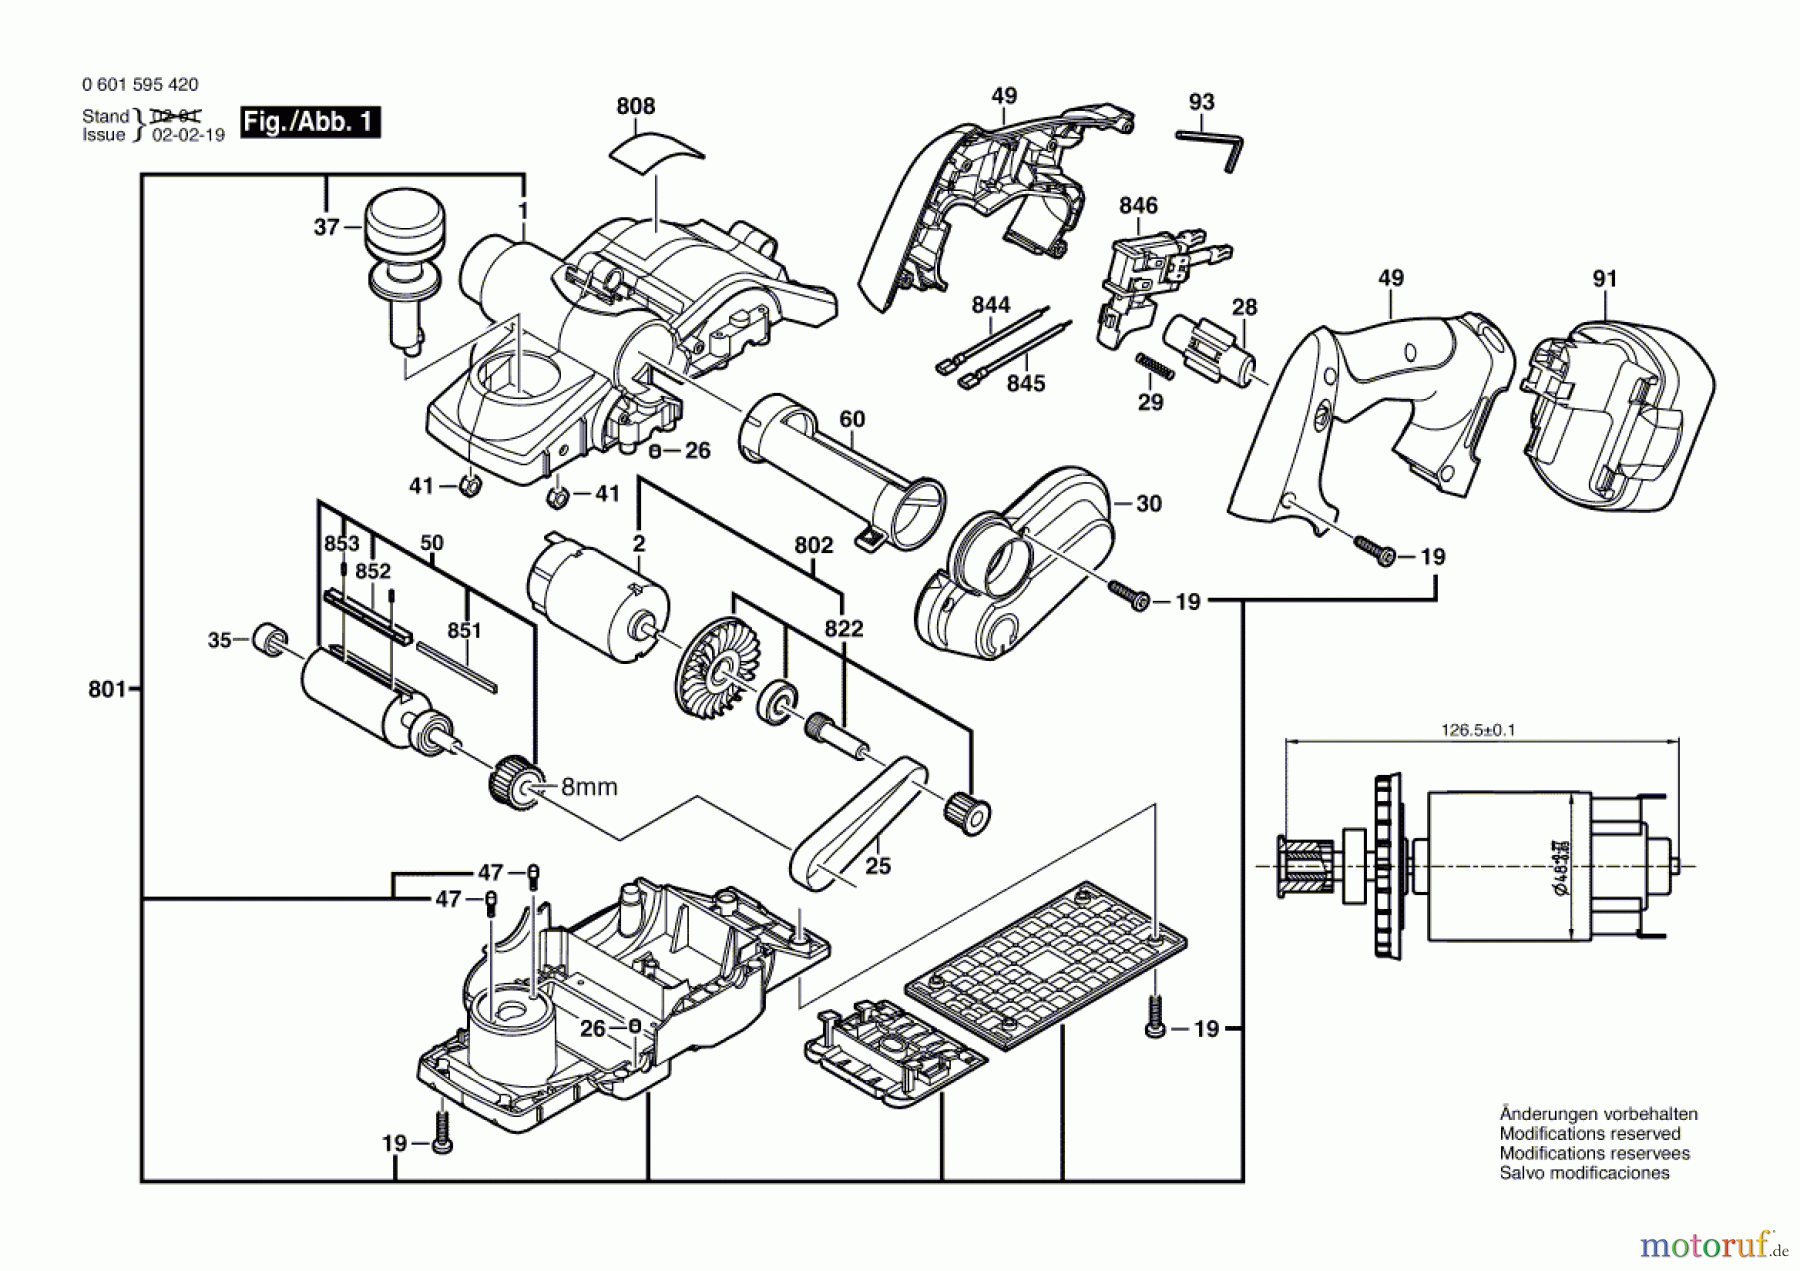  Bosch Werkzeug Handhobel GHO 14,4 V Seite 1